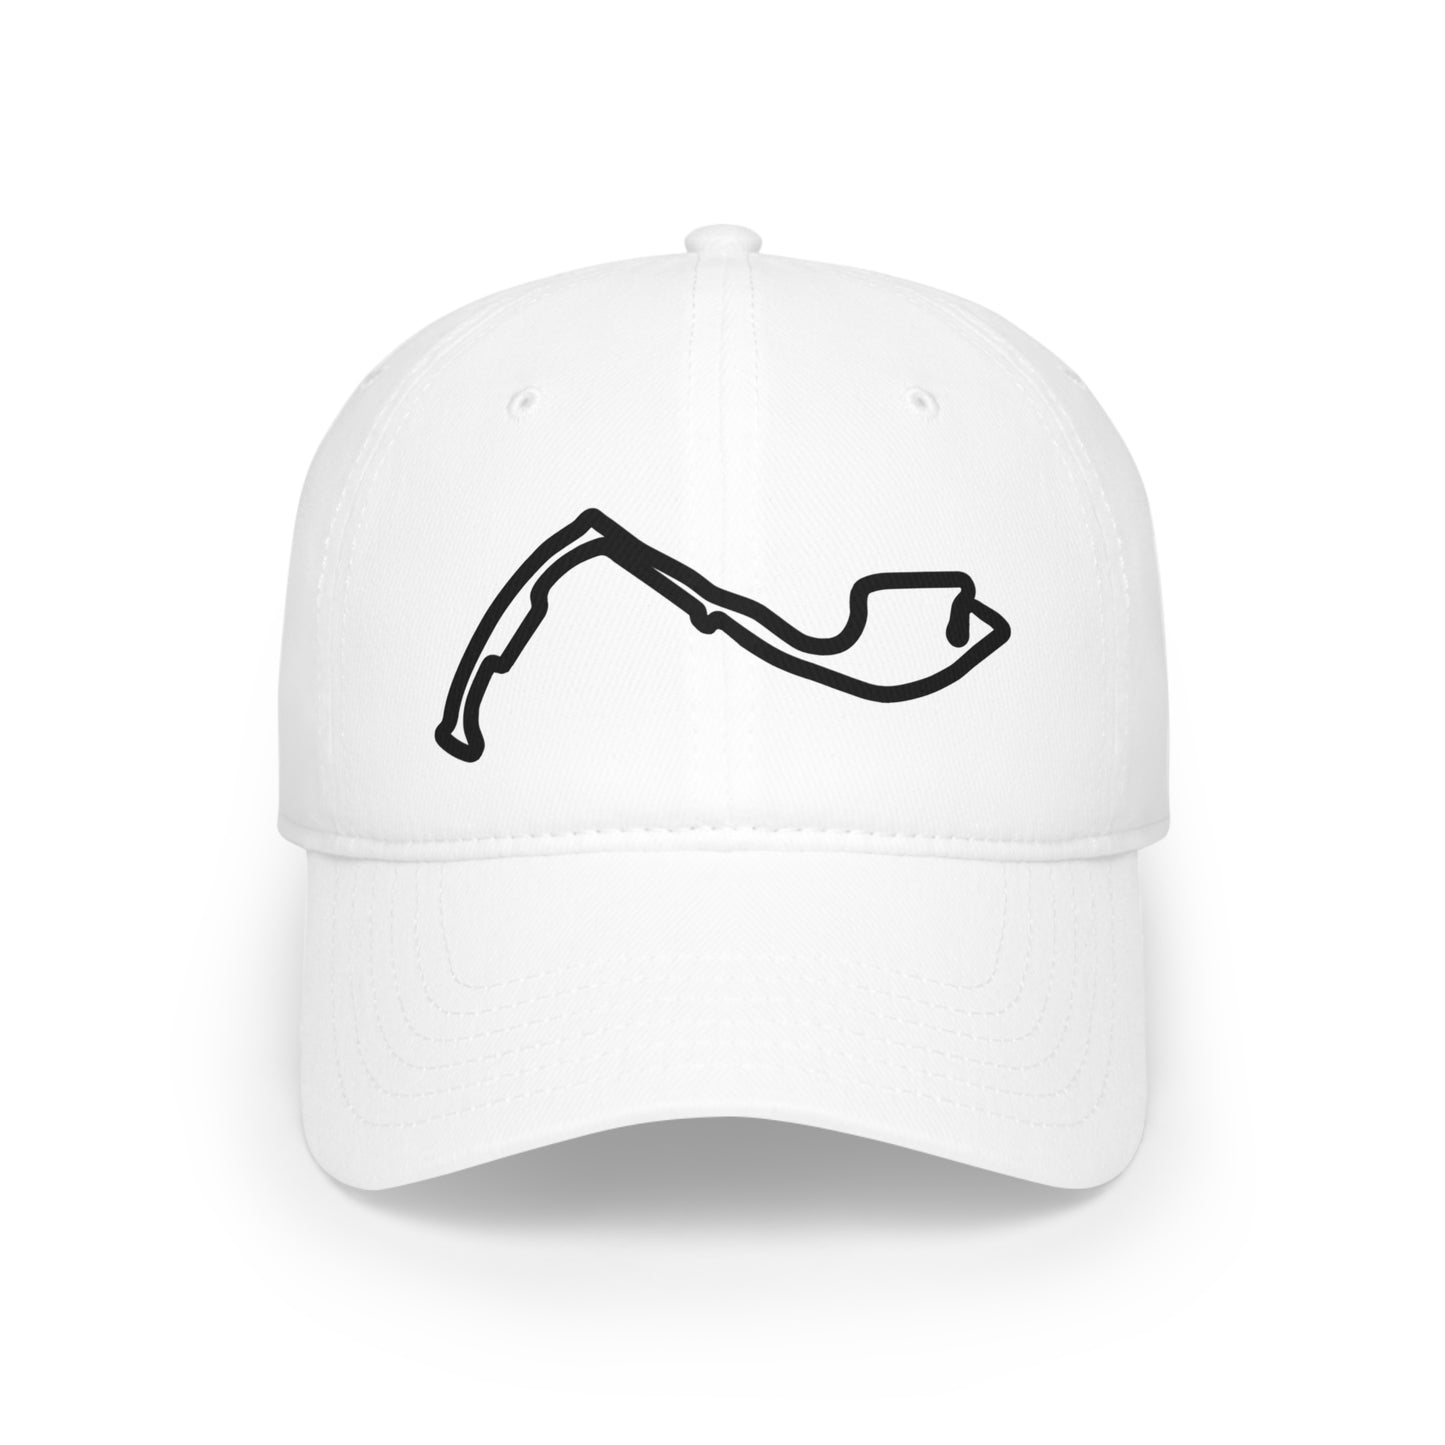 Monaco Grand Prix Baseball Hat